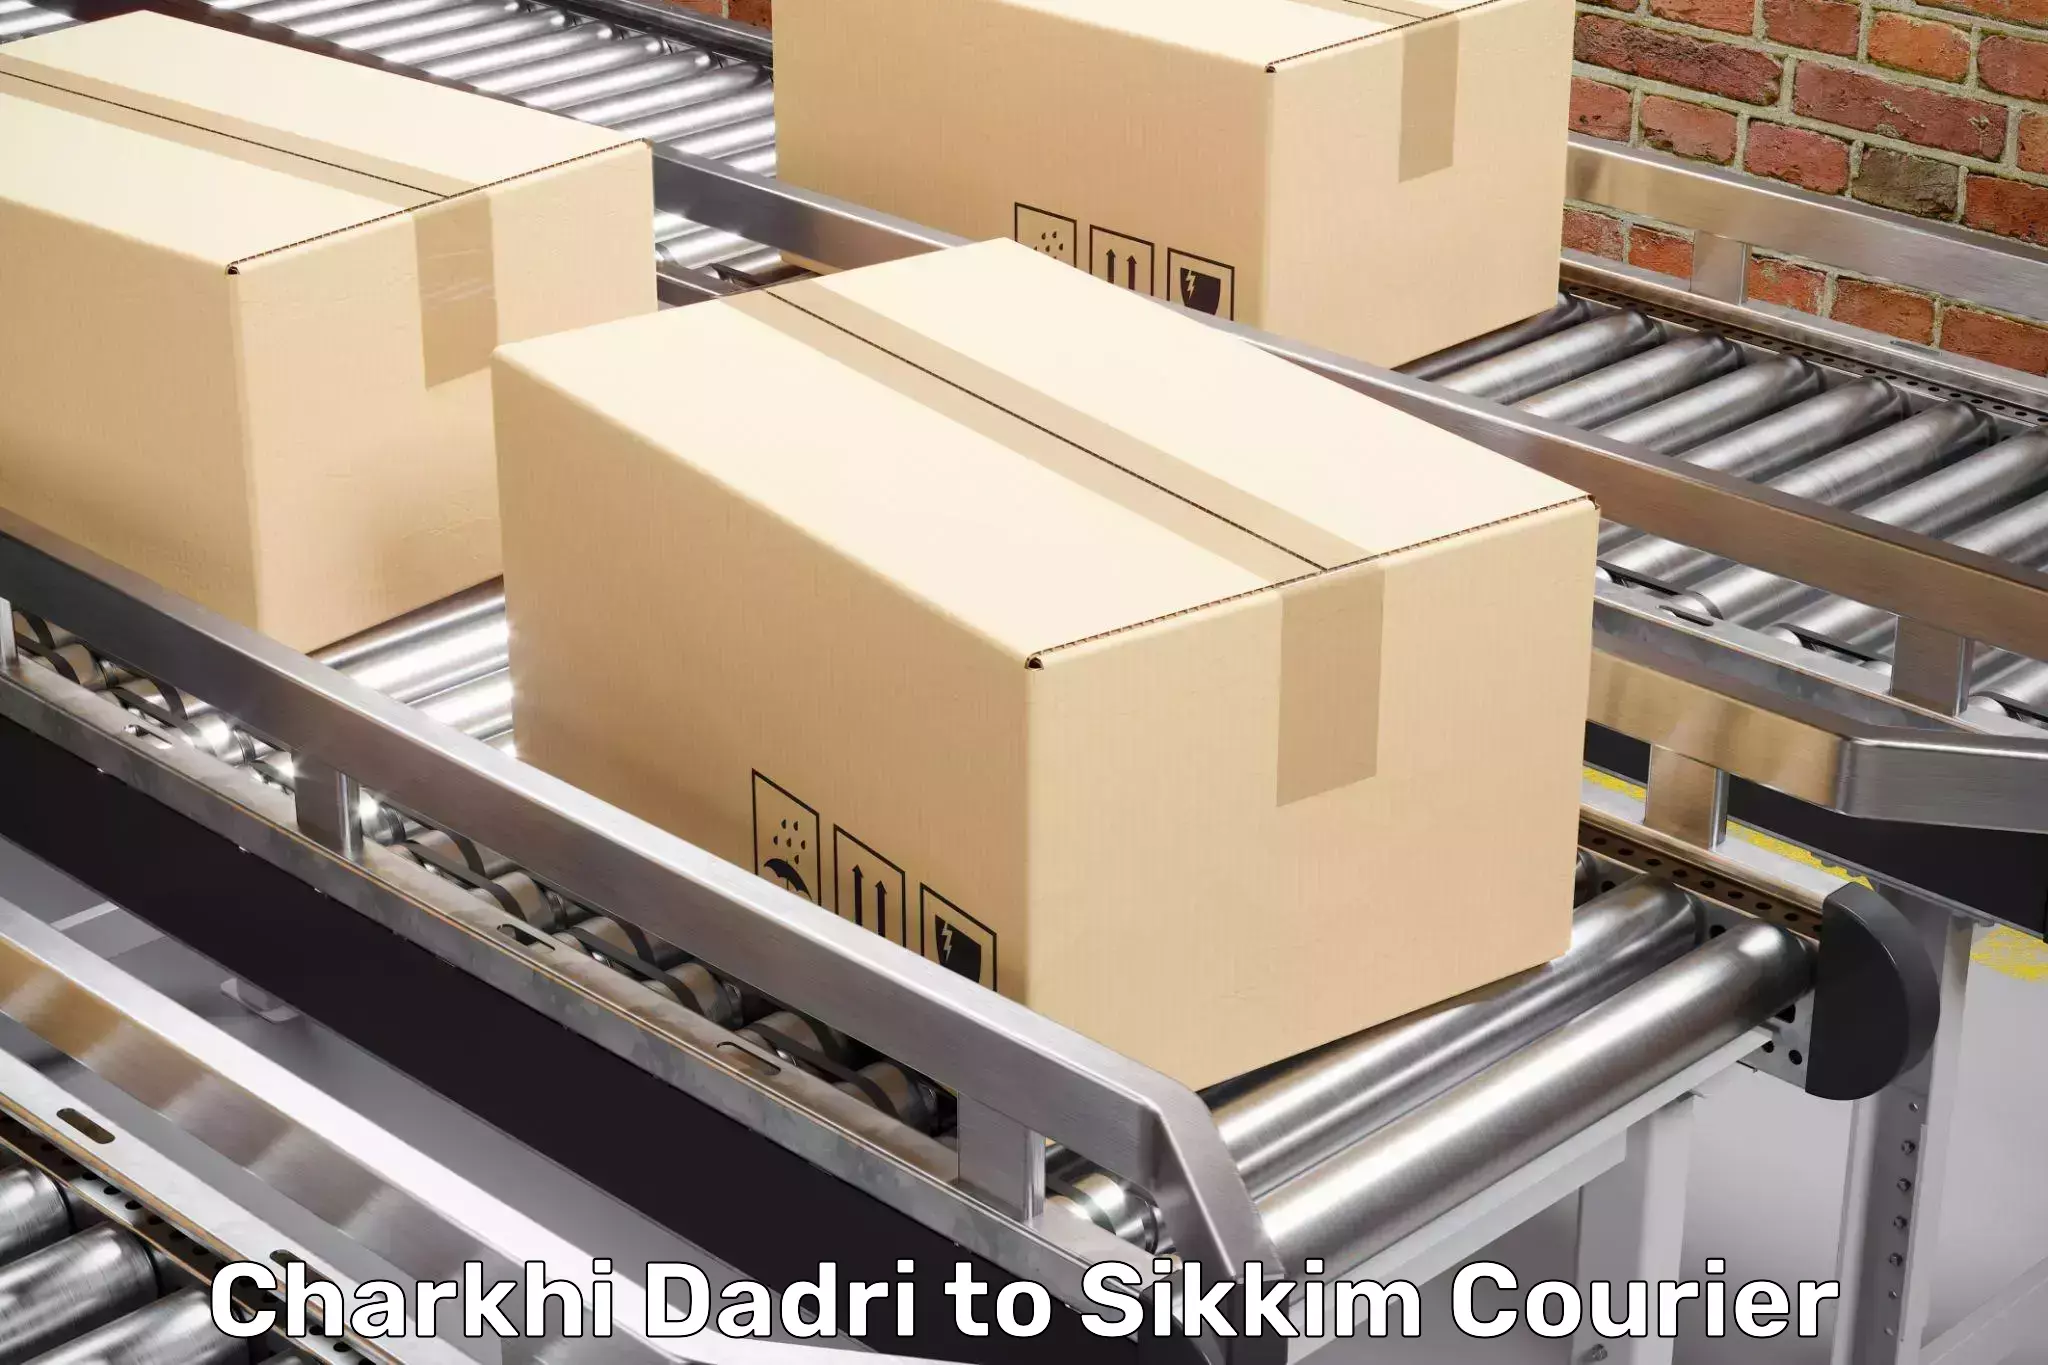 Professional moving company Charkhi Dadri to Sikkim